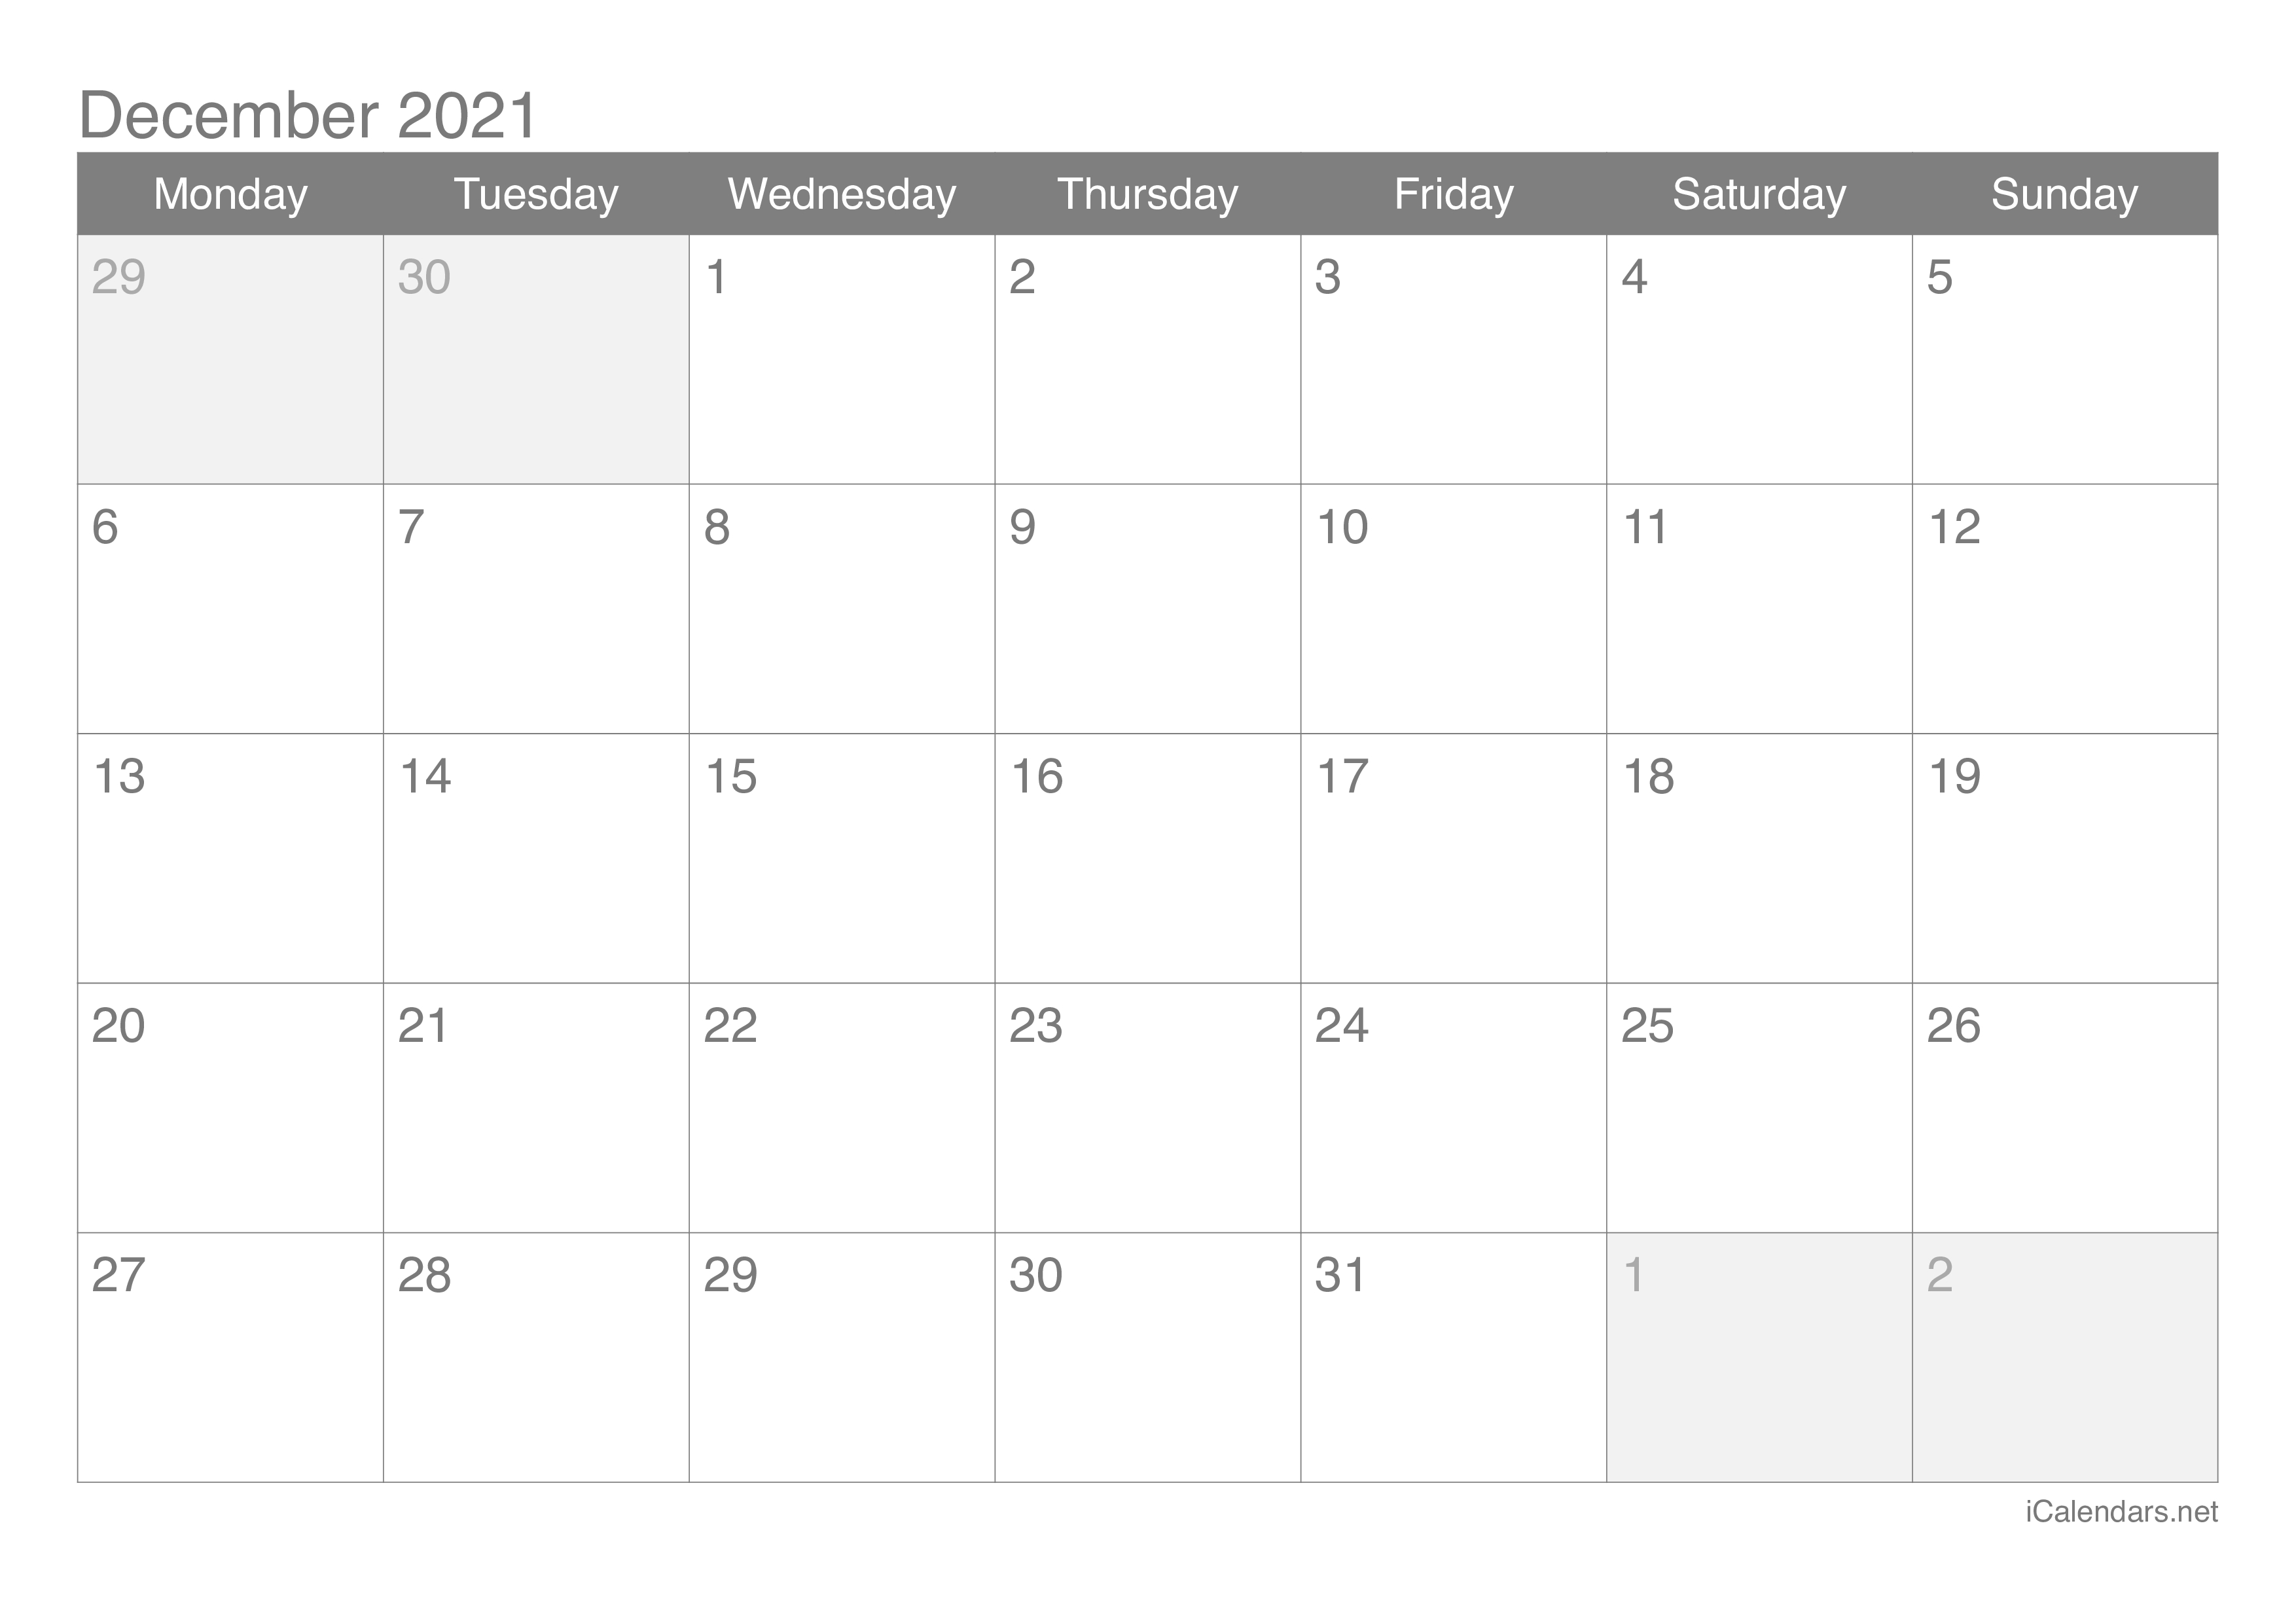 December 2021 Printable Calendar - Icalendars December 2021 Calendar Excel